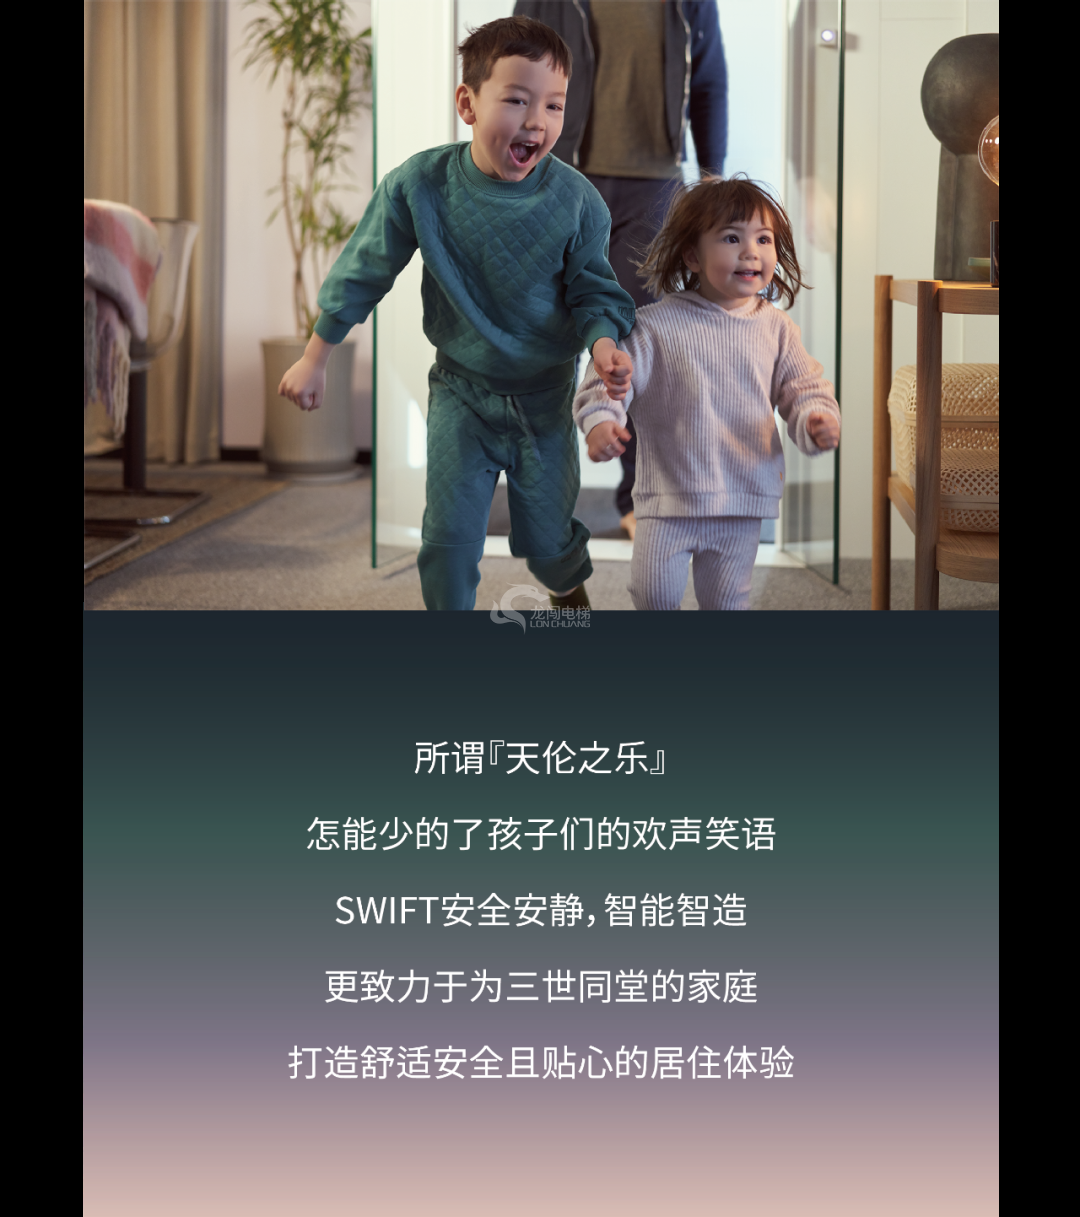 SWIFT家用电梯：安全居家通行，童颜欢笑徜徉111.png